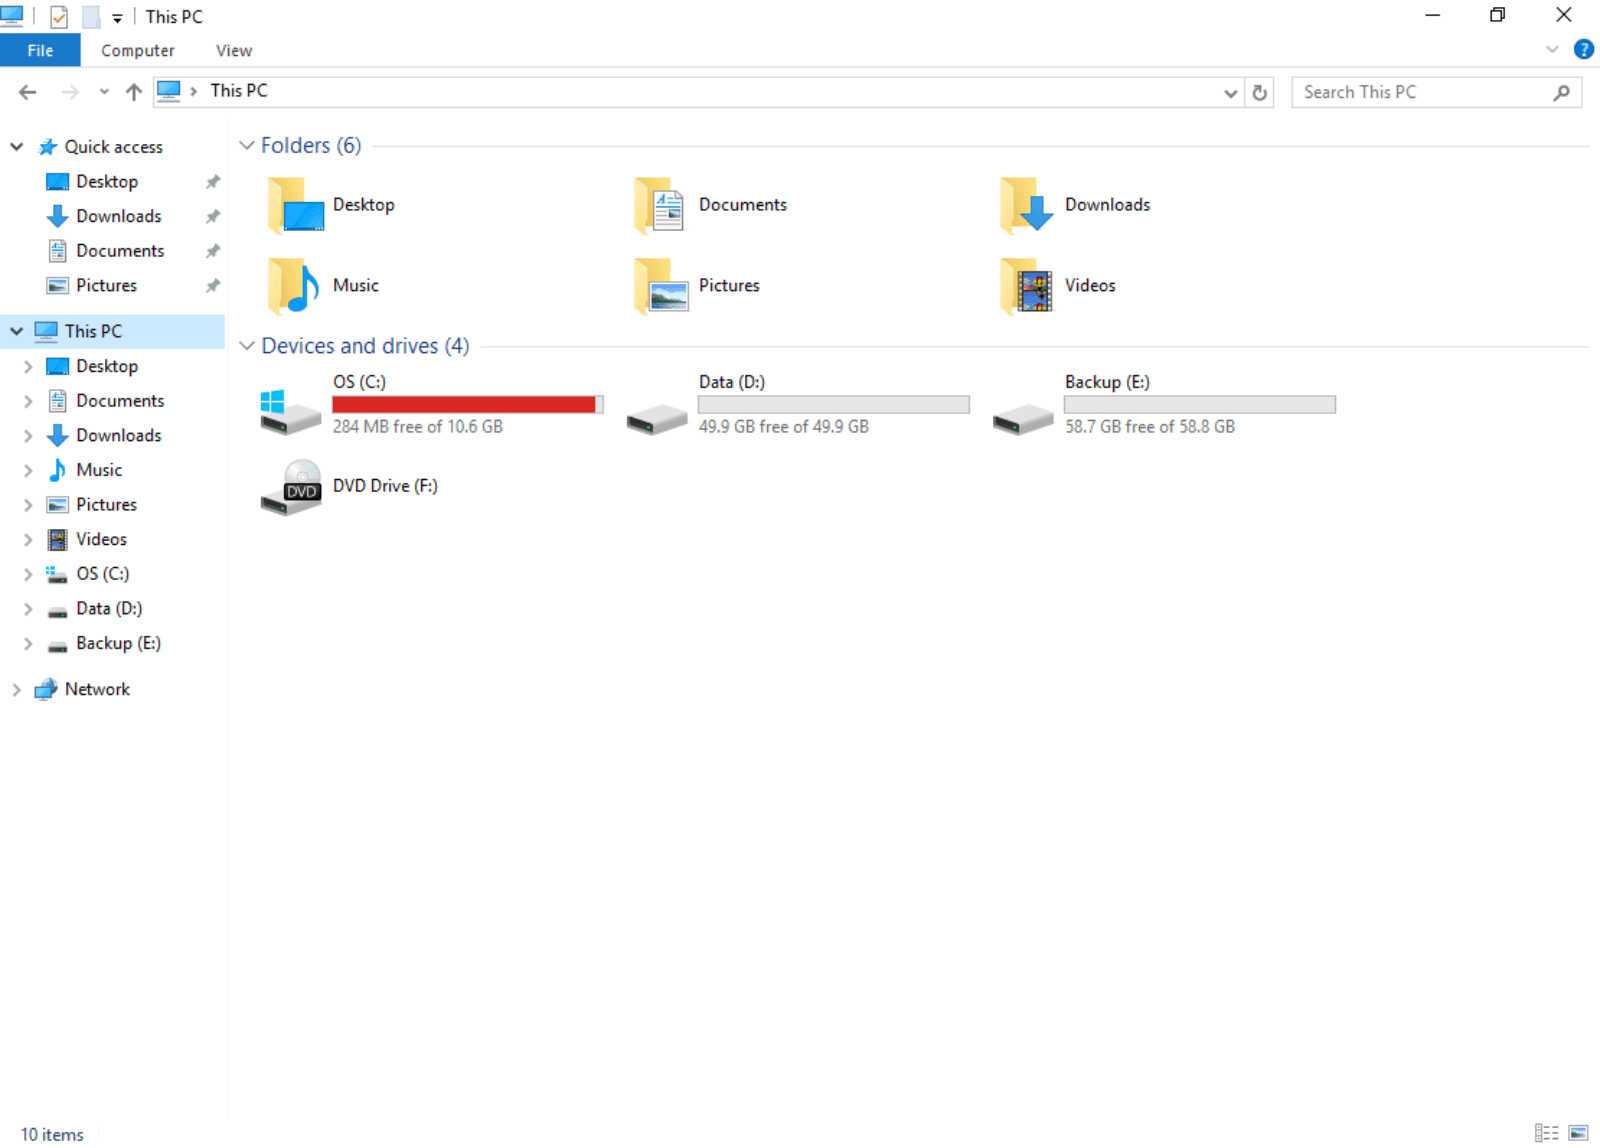 Windows 10 now requires a minimum of 32GB storage space